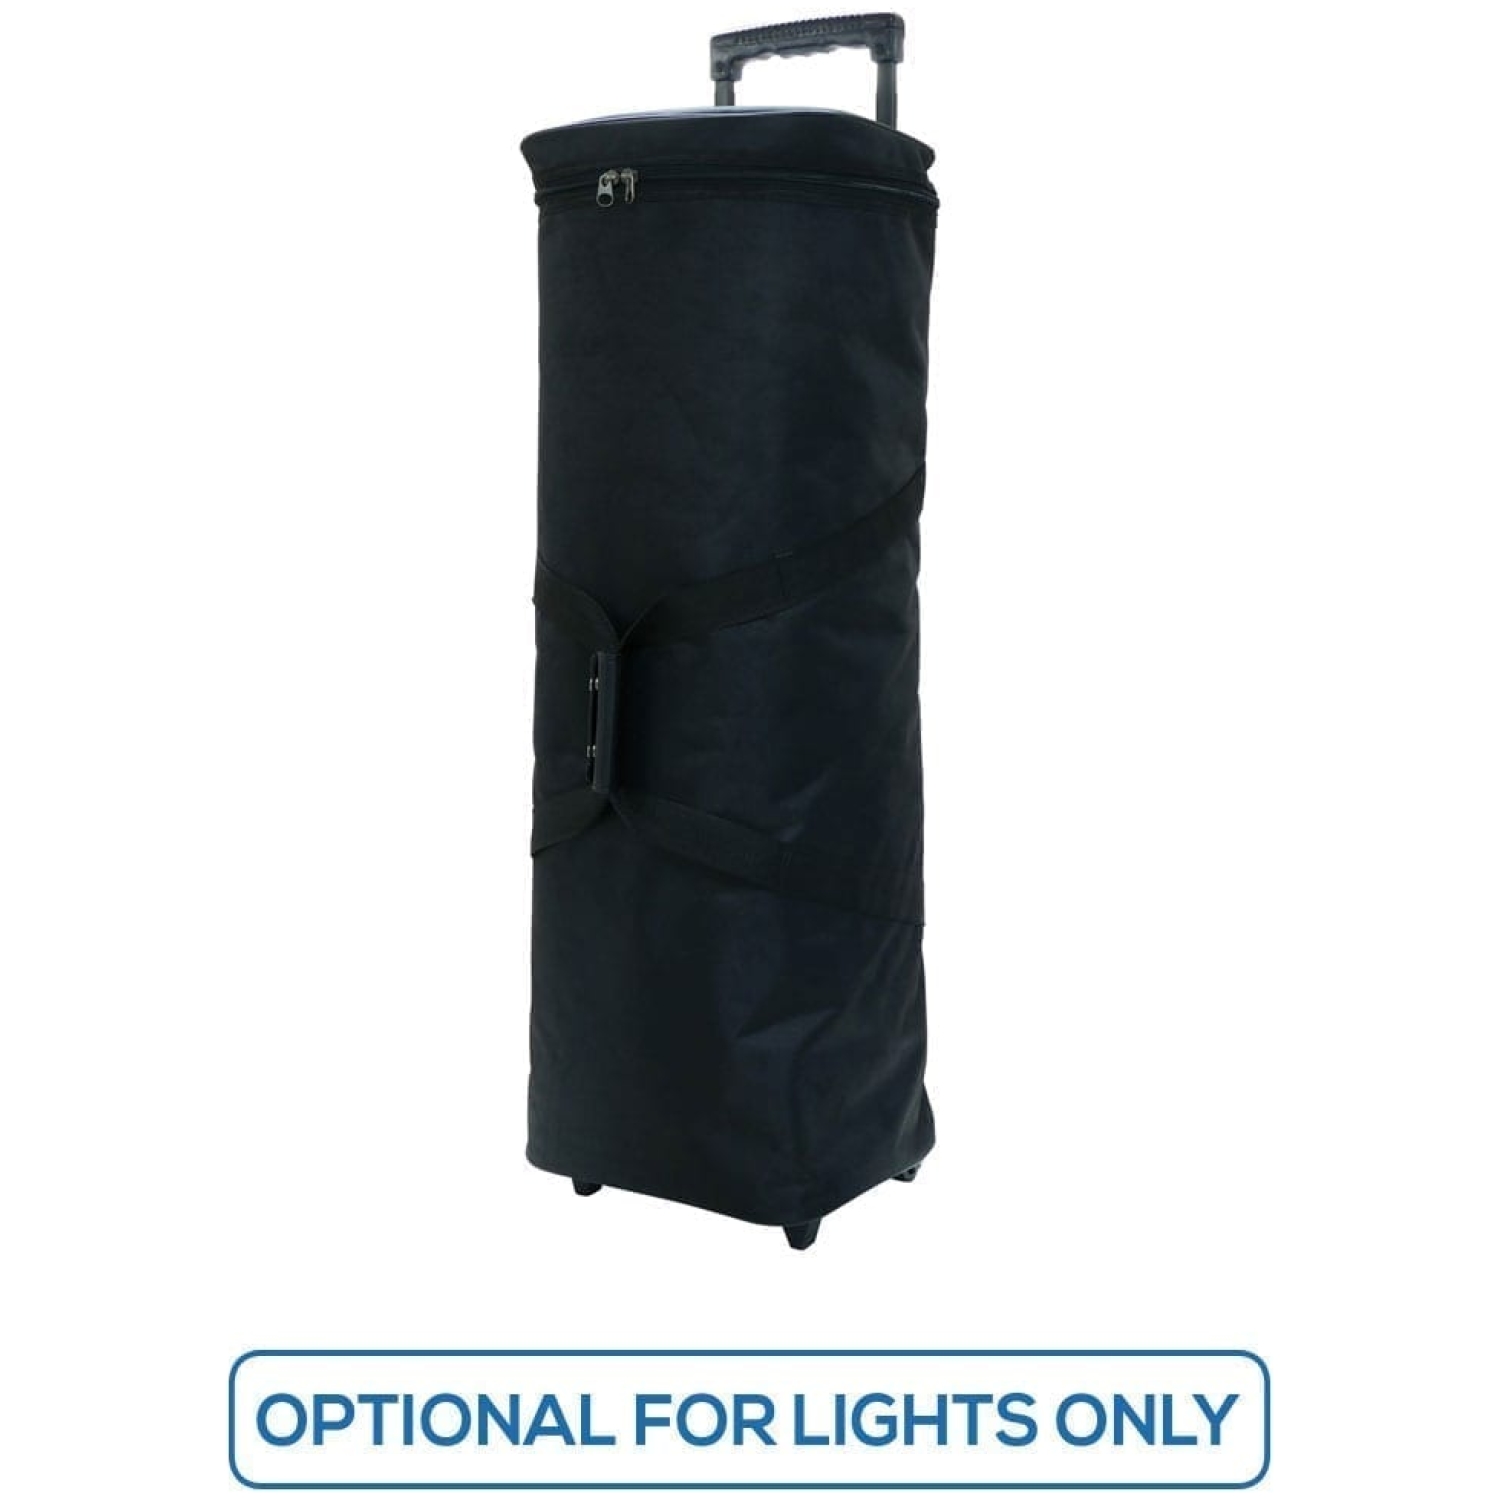 Lumière Light Wall® — 10ft L-shape Configuration B Backlit — Graphic Package